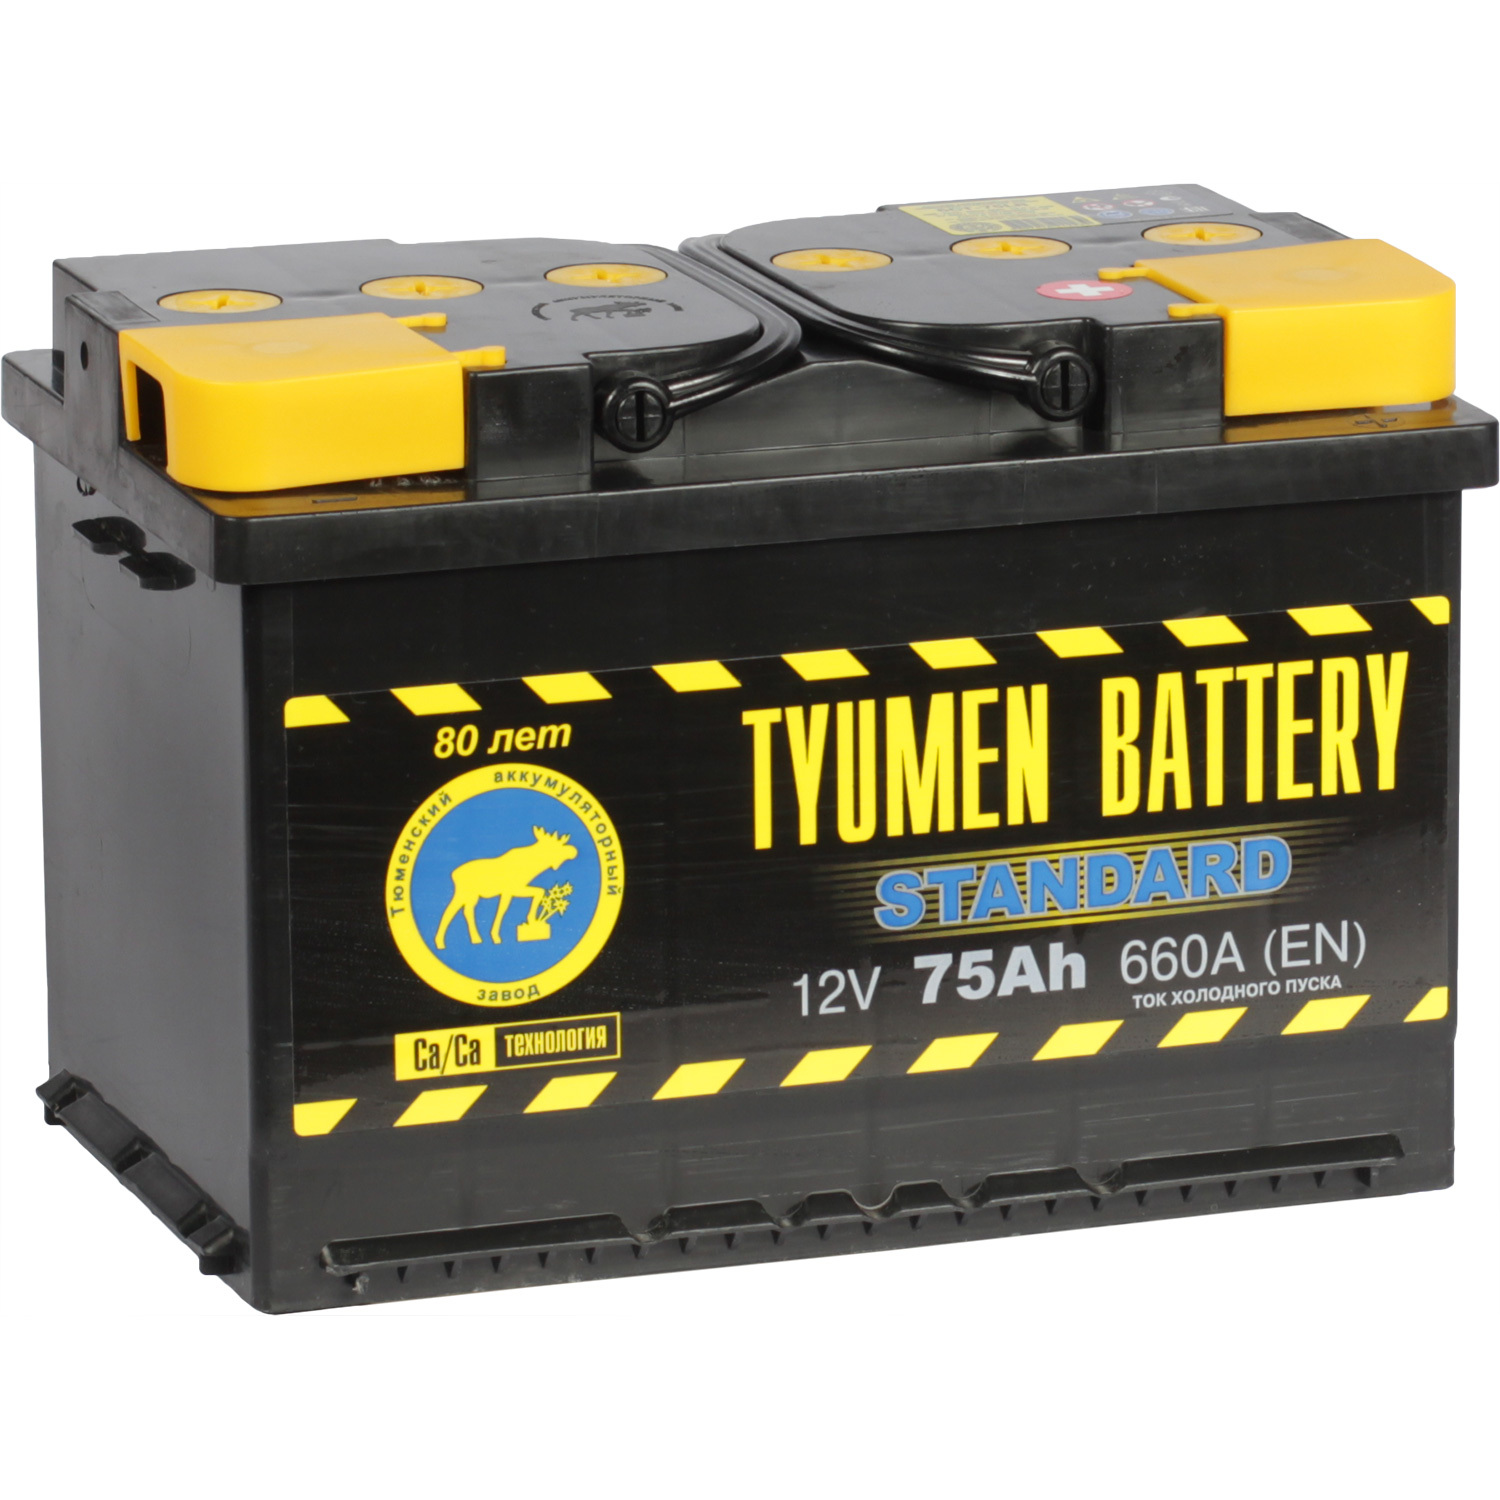 Tyumen Battery Автомобильный аккумулятор Tyumen Battery Standard 75 Ач обратная полярность L3 tyumen battery автомобильный аккумулятор tyumen battery asia 40 ач обратная полярность b19l